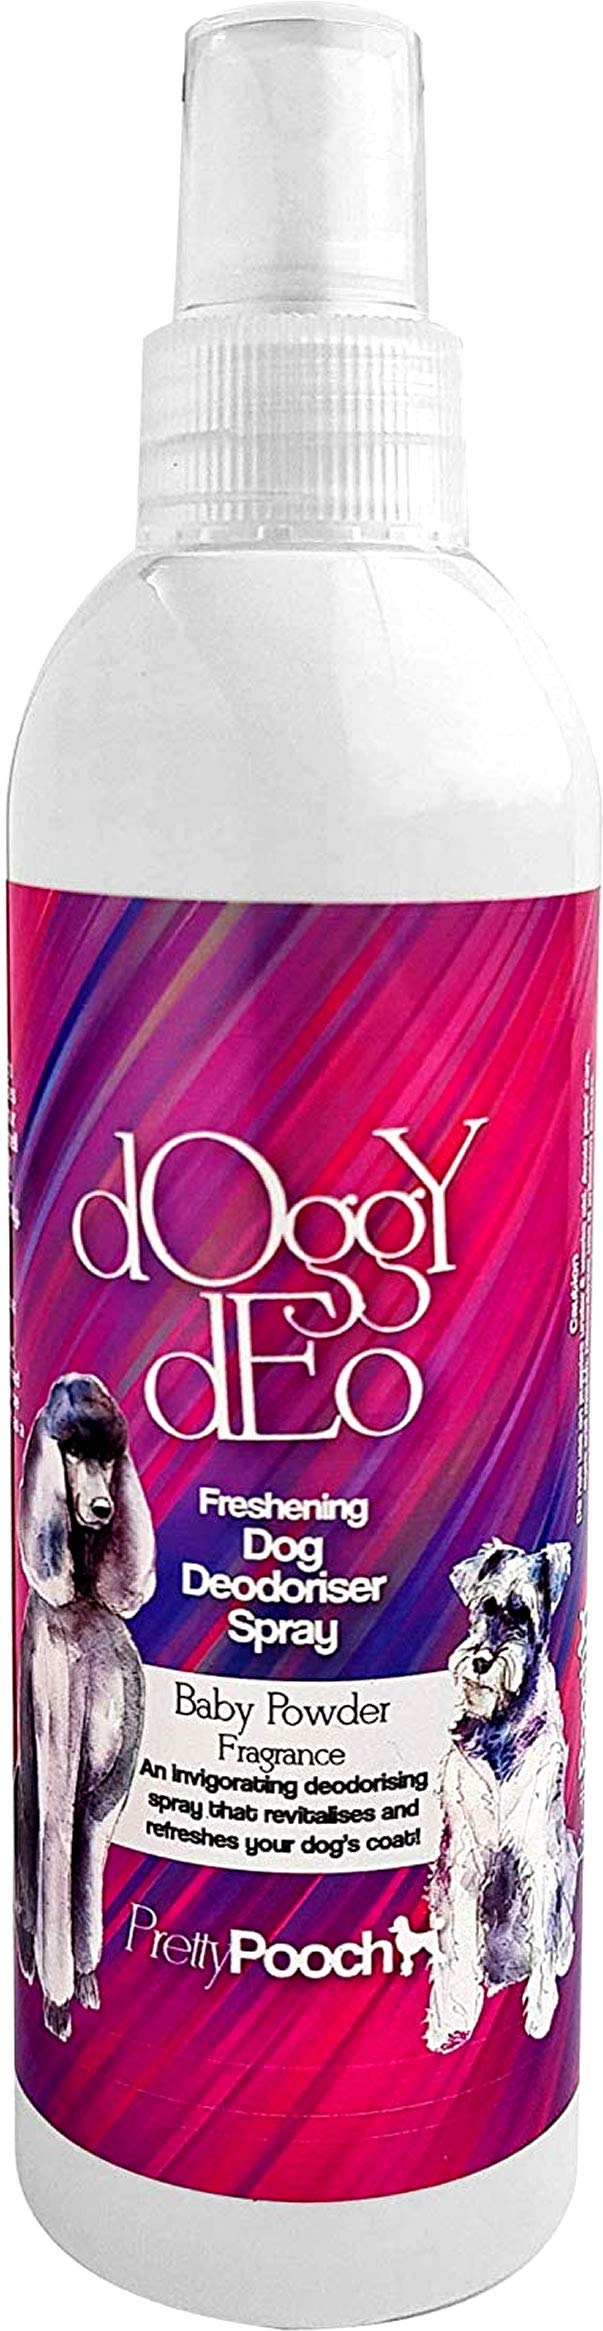 Pretty Pooch Dog Deodoriser Spray Perfume 250ml - Baby Powder - Freshening Dry Shampoo Spray for Dogs - Made in the UK - PawsPlanet Australia